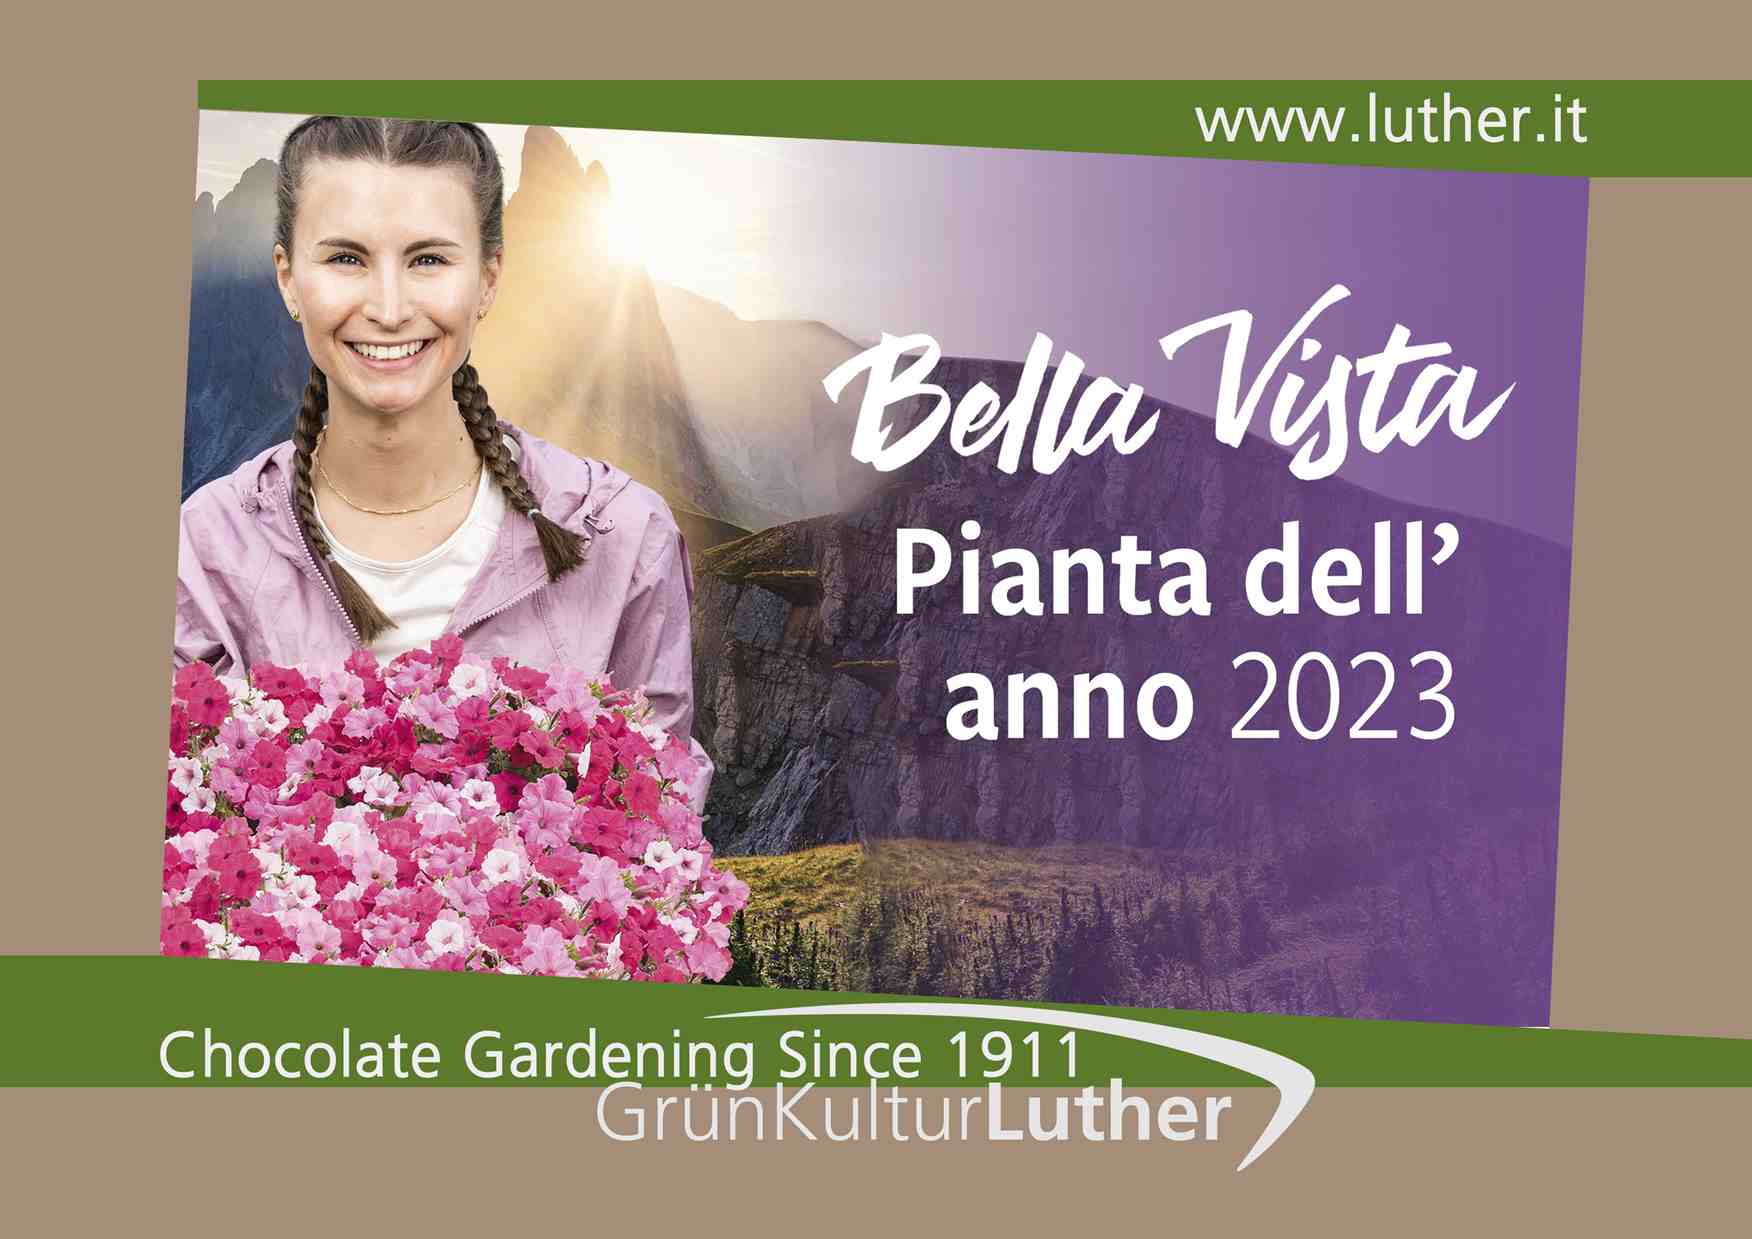 Petunia Vista - Pianta dell anno 2023